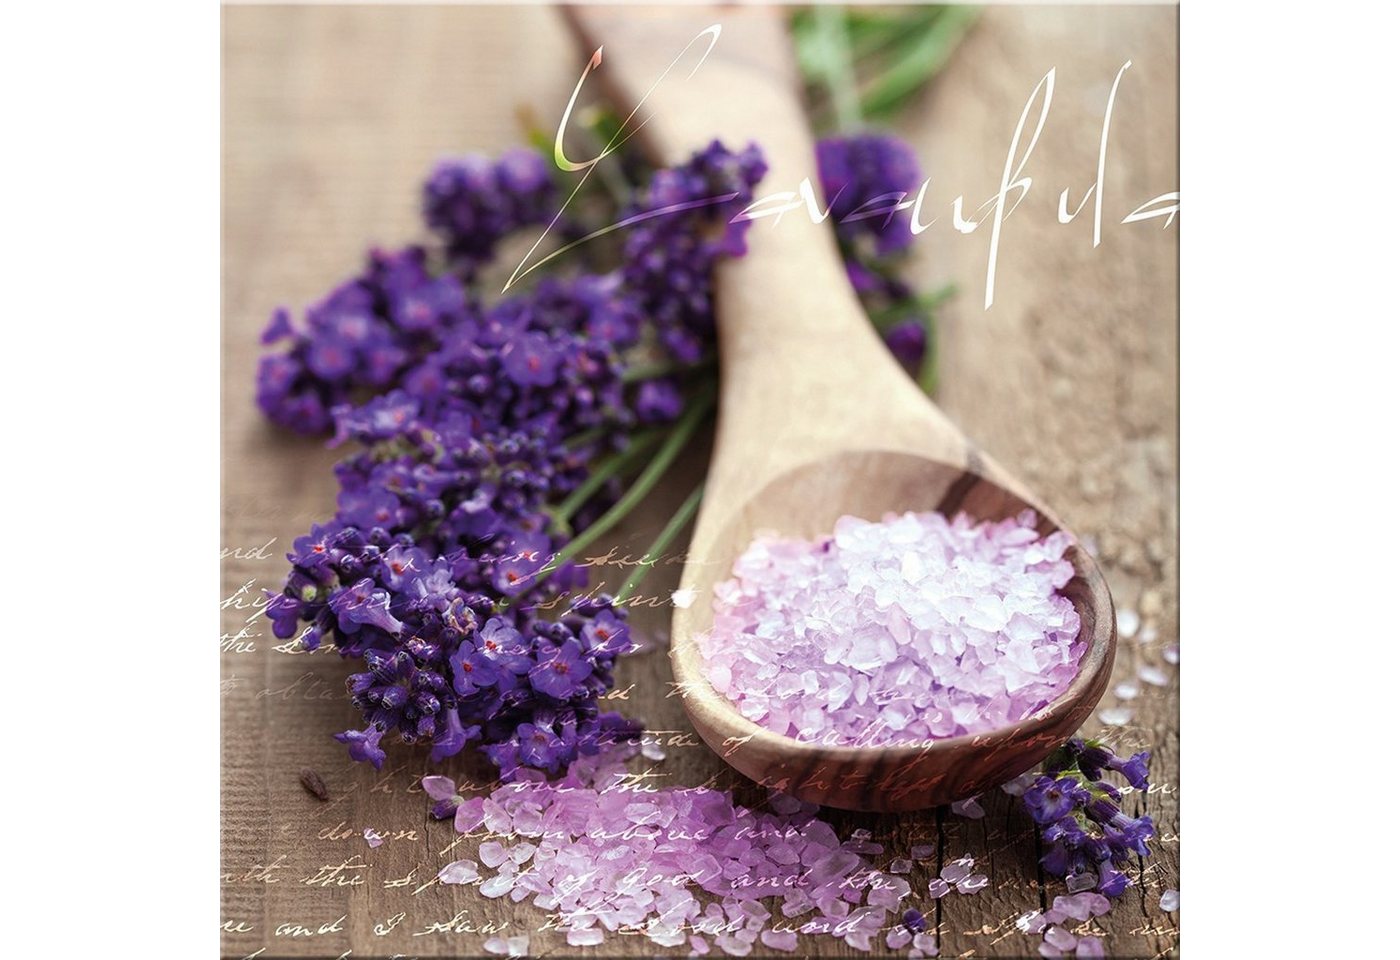 artissimo Glasbild Glasbild 30x30cm Bild Wellness Blumen Lavendel lila, Spa: Lavendel von artissimo